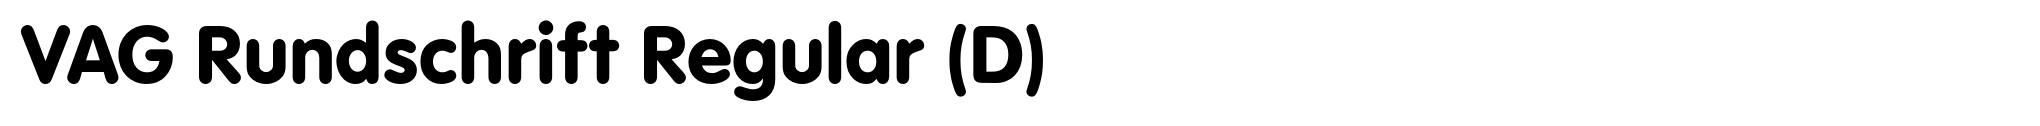 VAG Rundschrift Regular (D) image